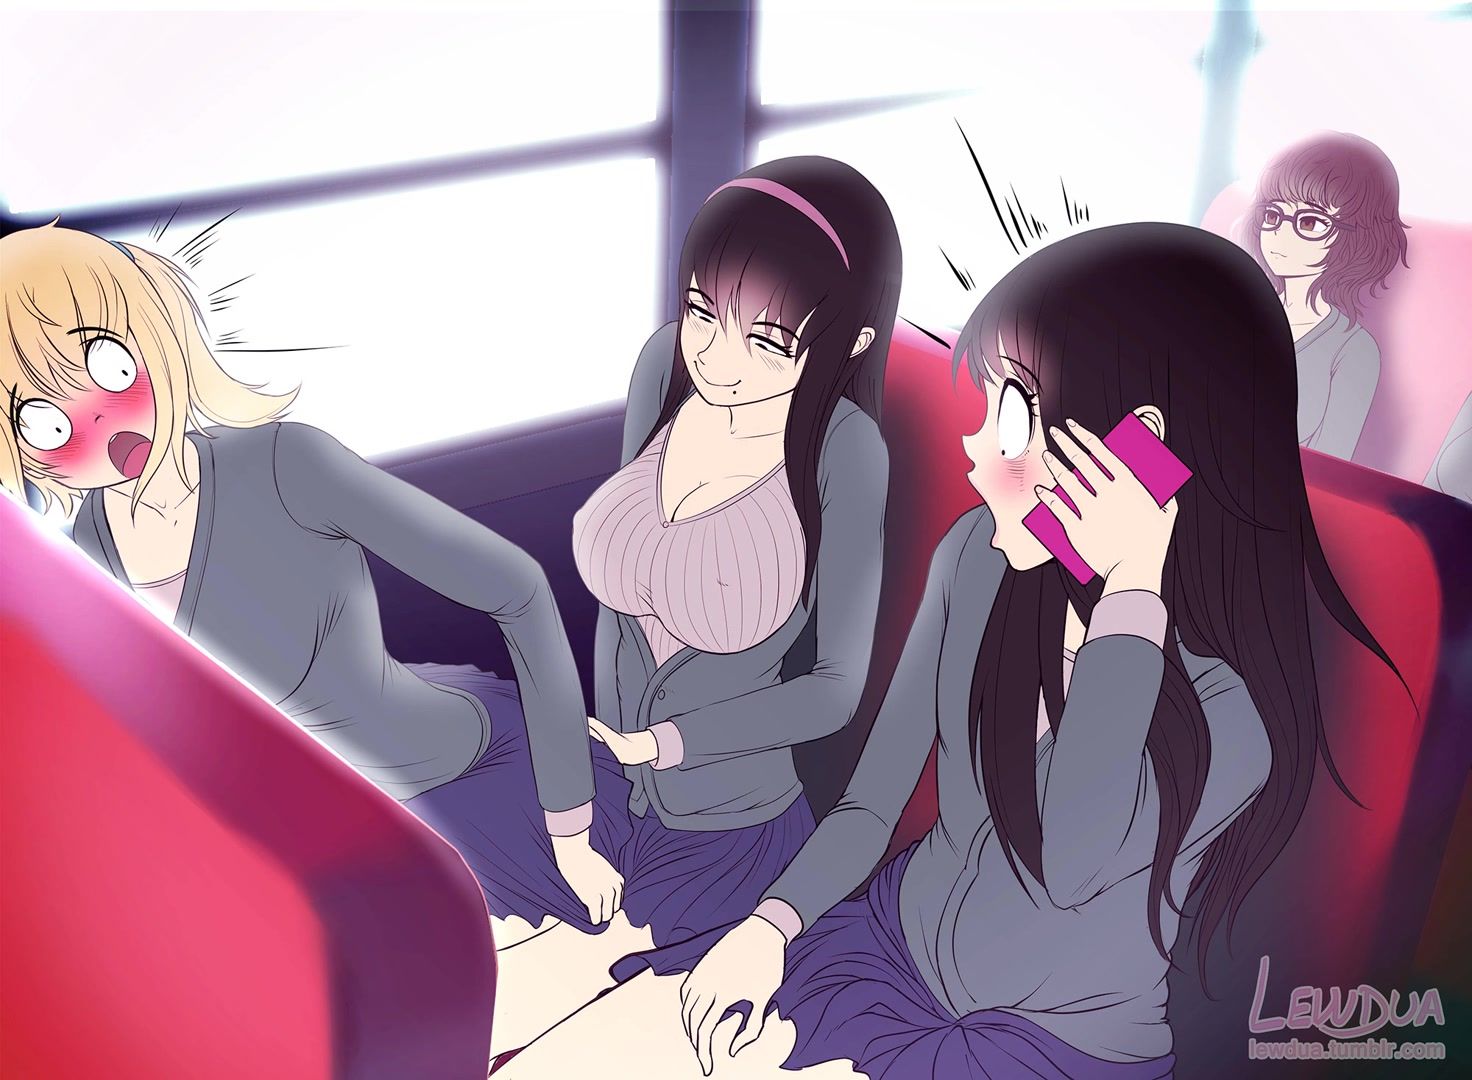 Teen anime girls secretly fuck on the student image image